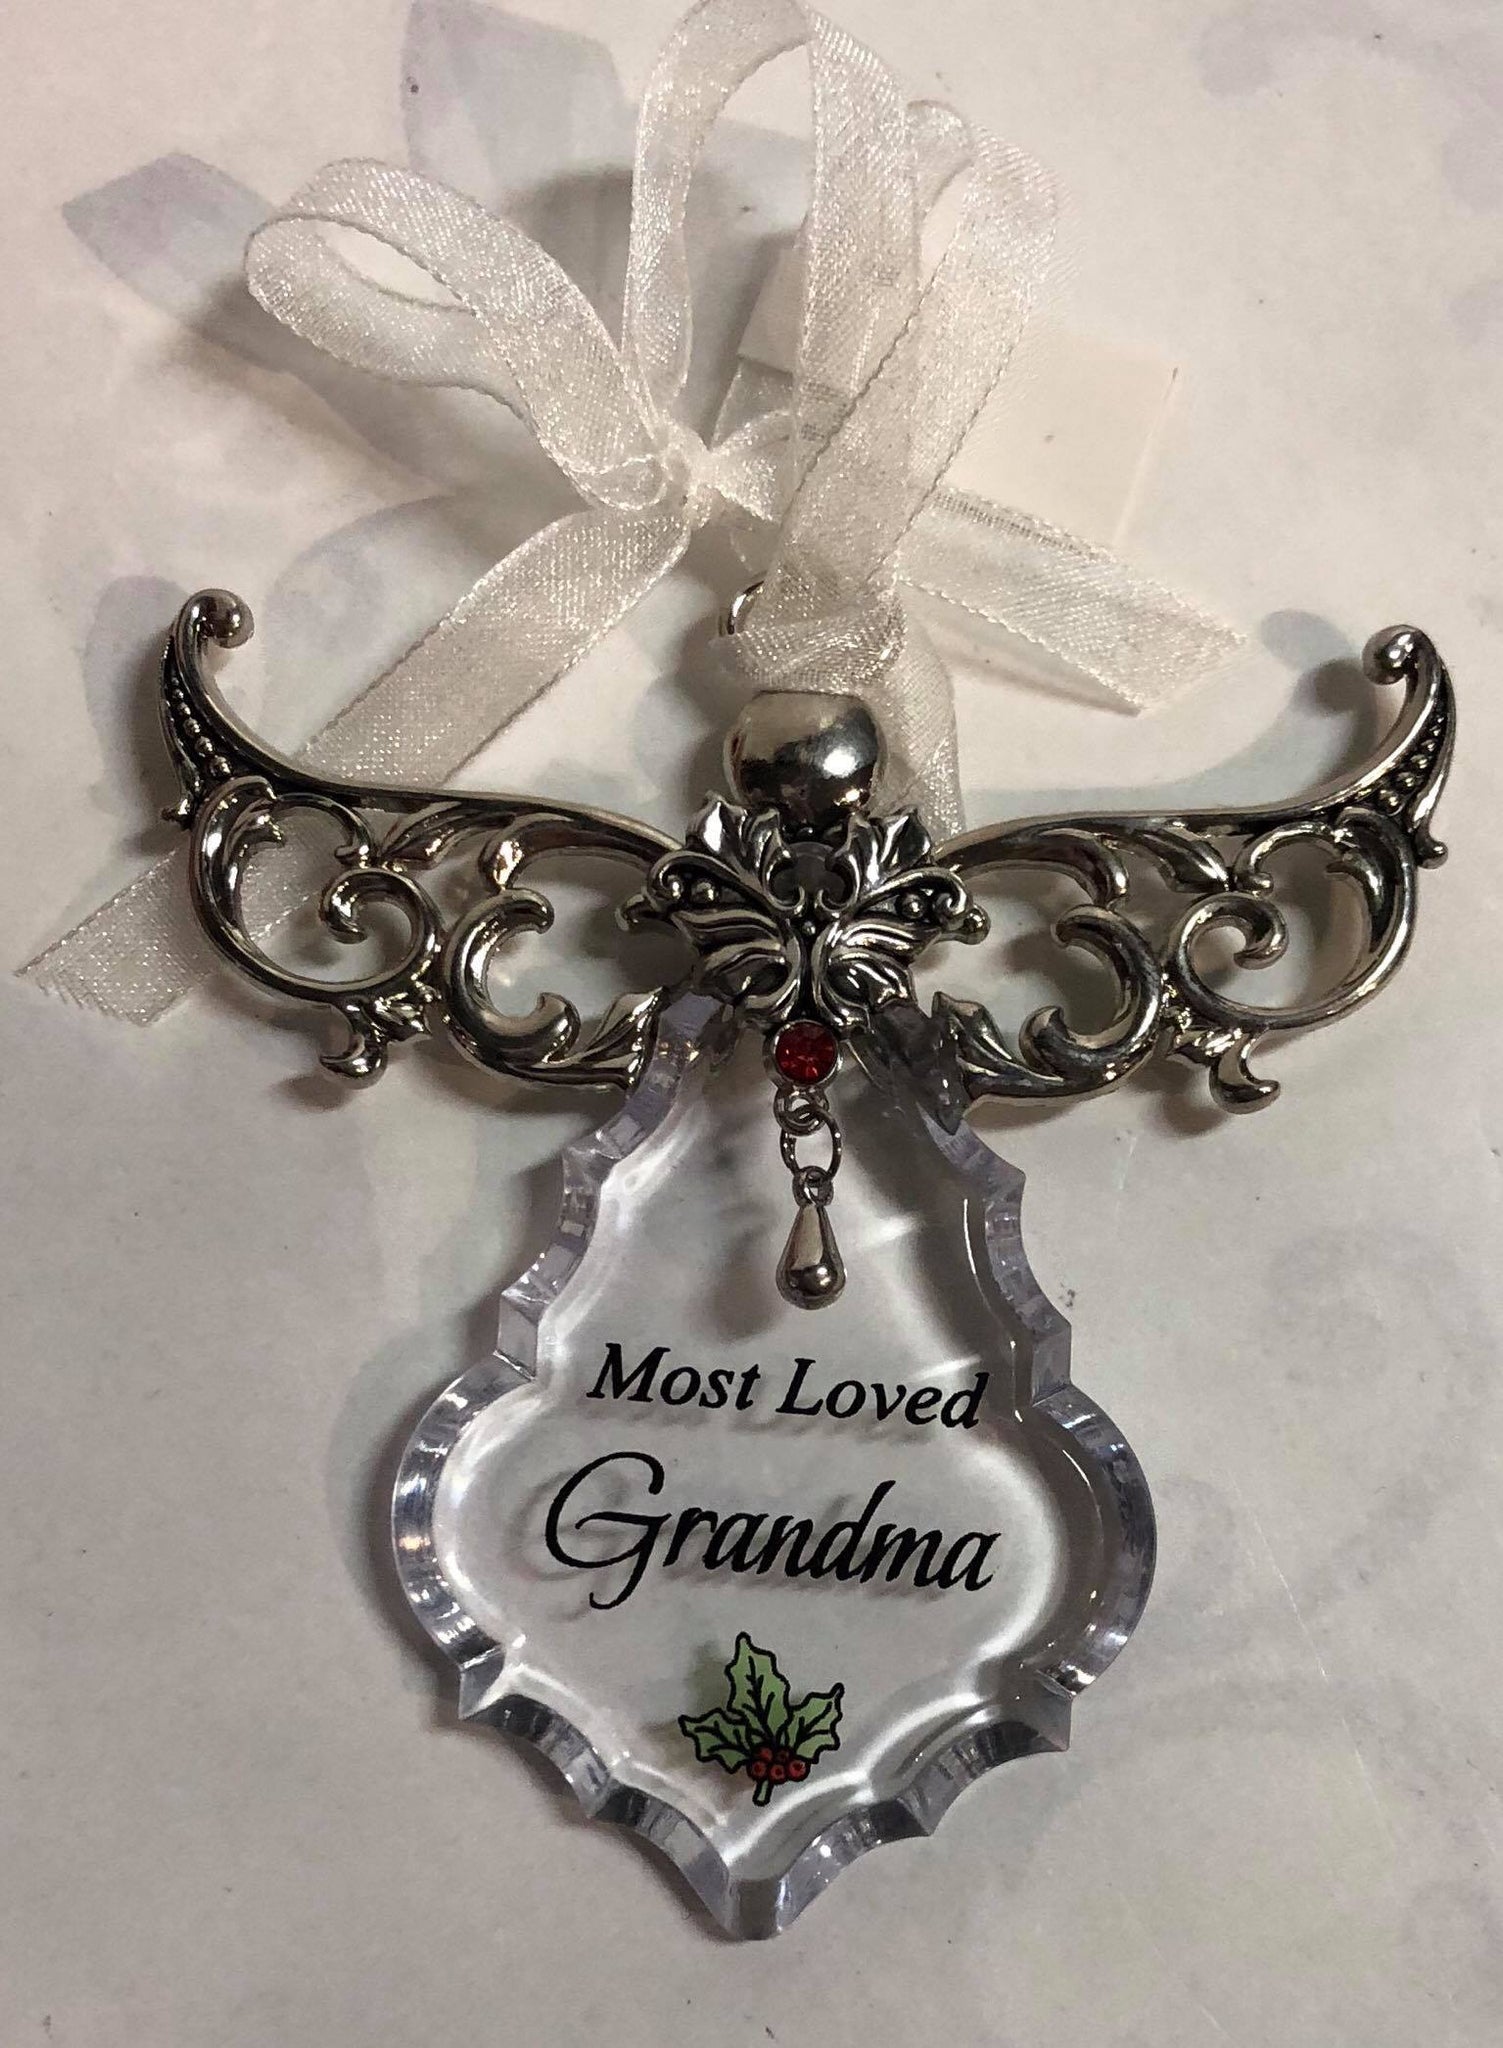 Acrylic Angel Tree Ornament "Most Loved Grandma"